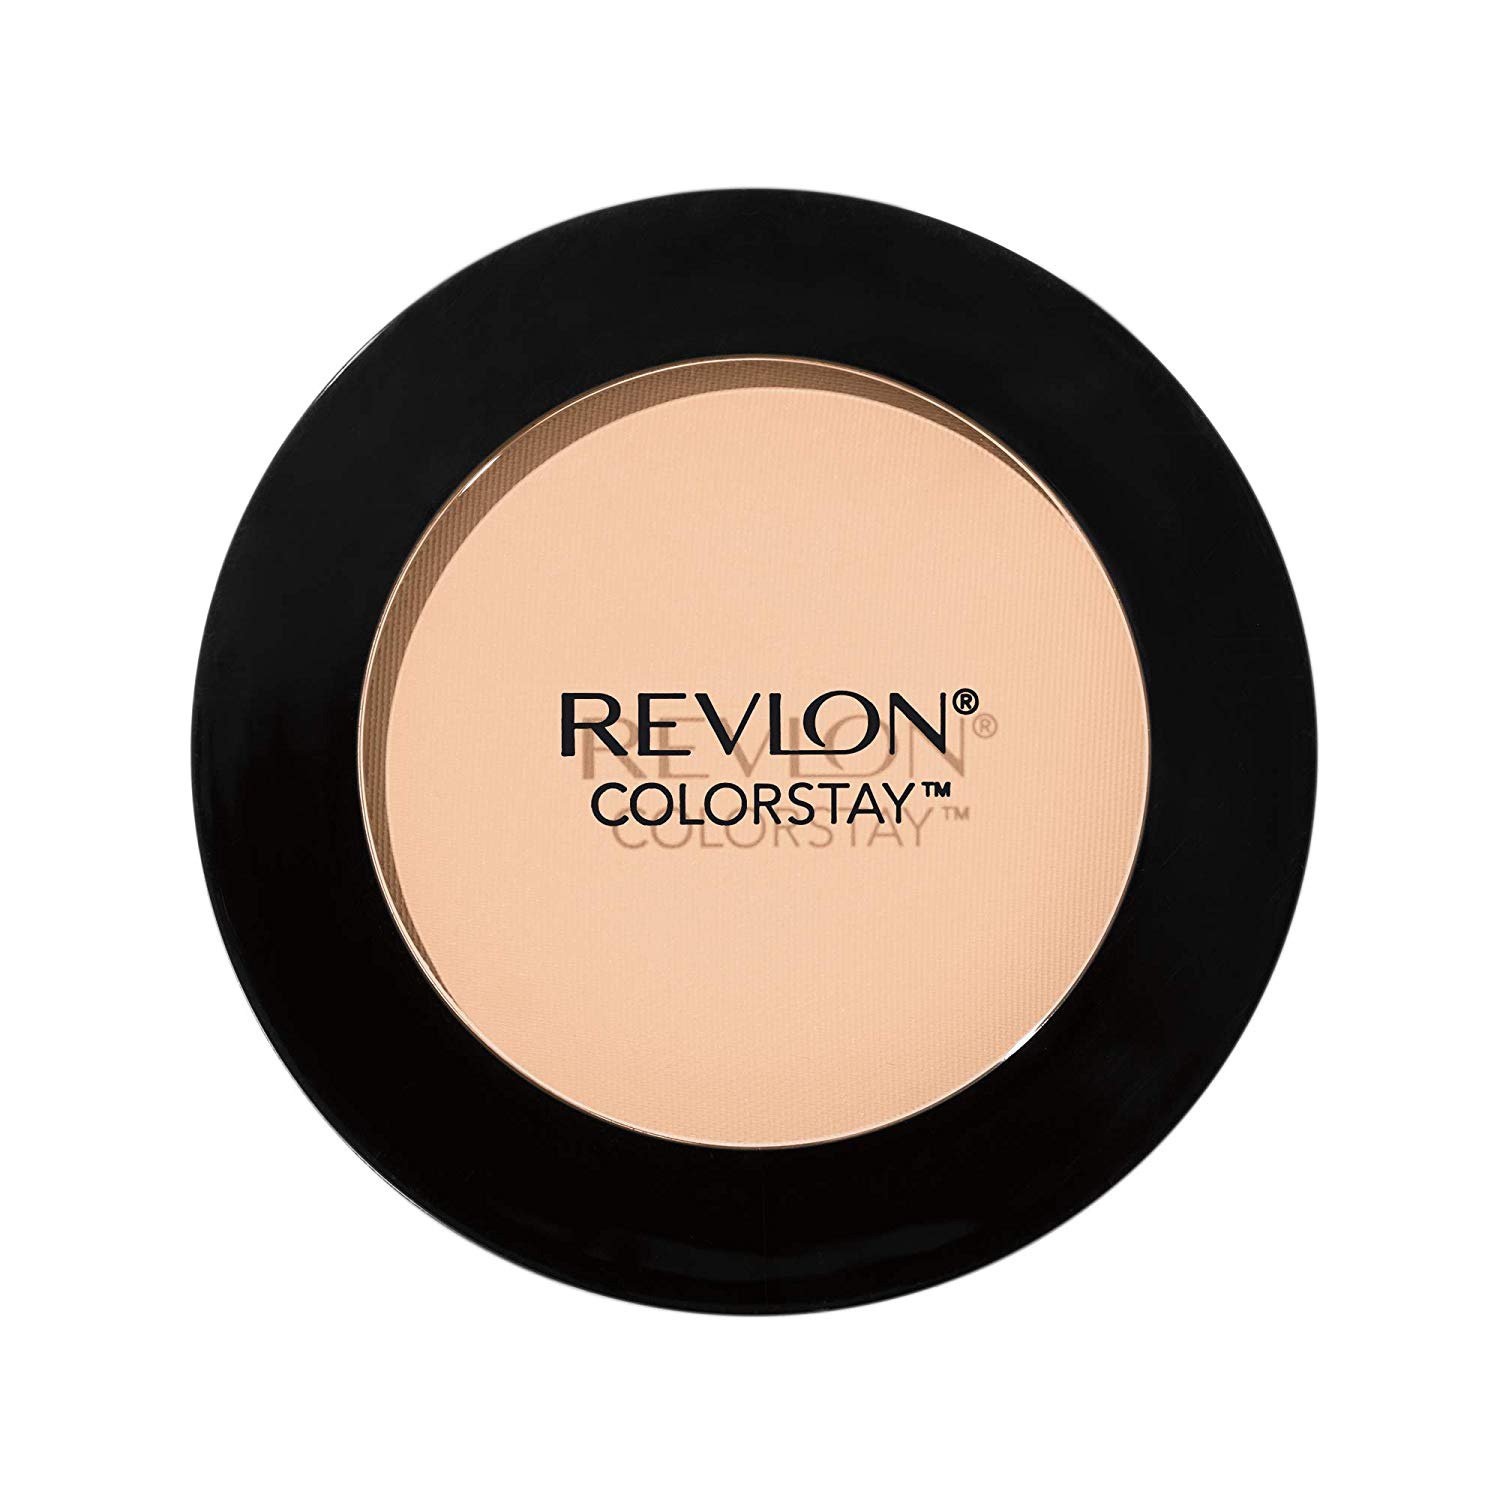 Revlon ColorStay Pressed Powder - Light Medium